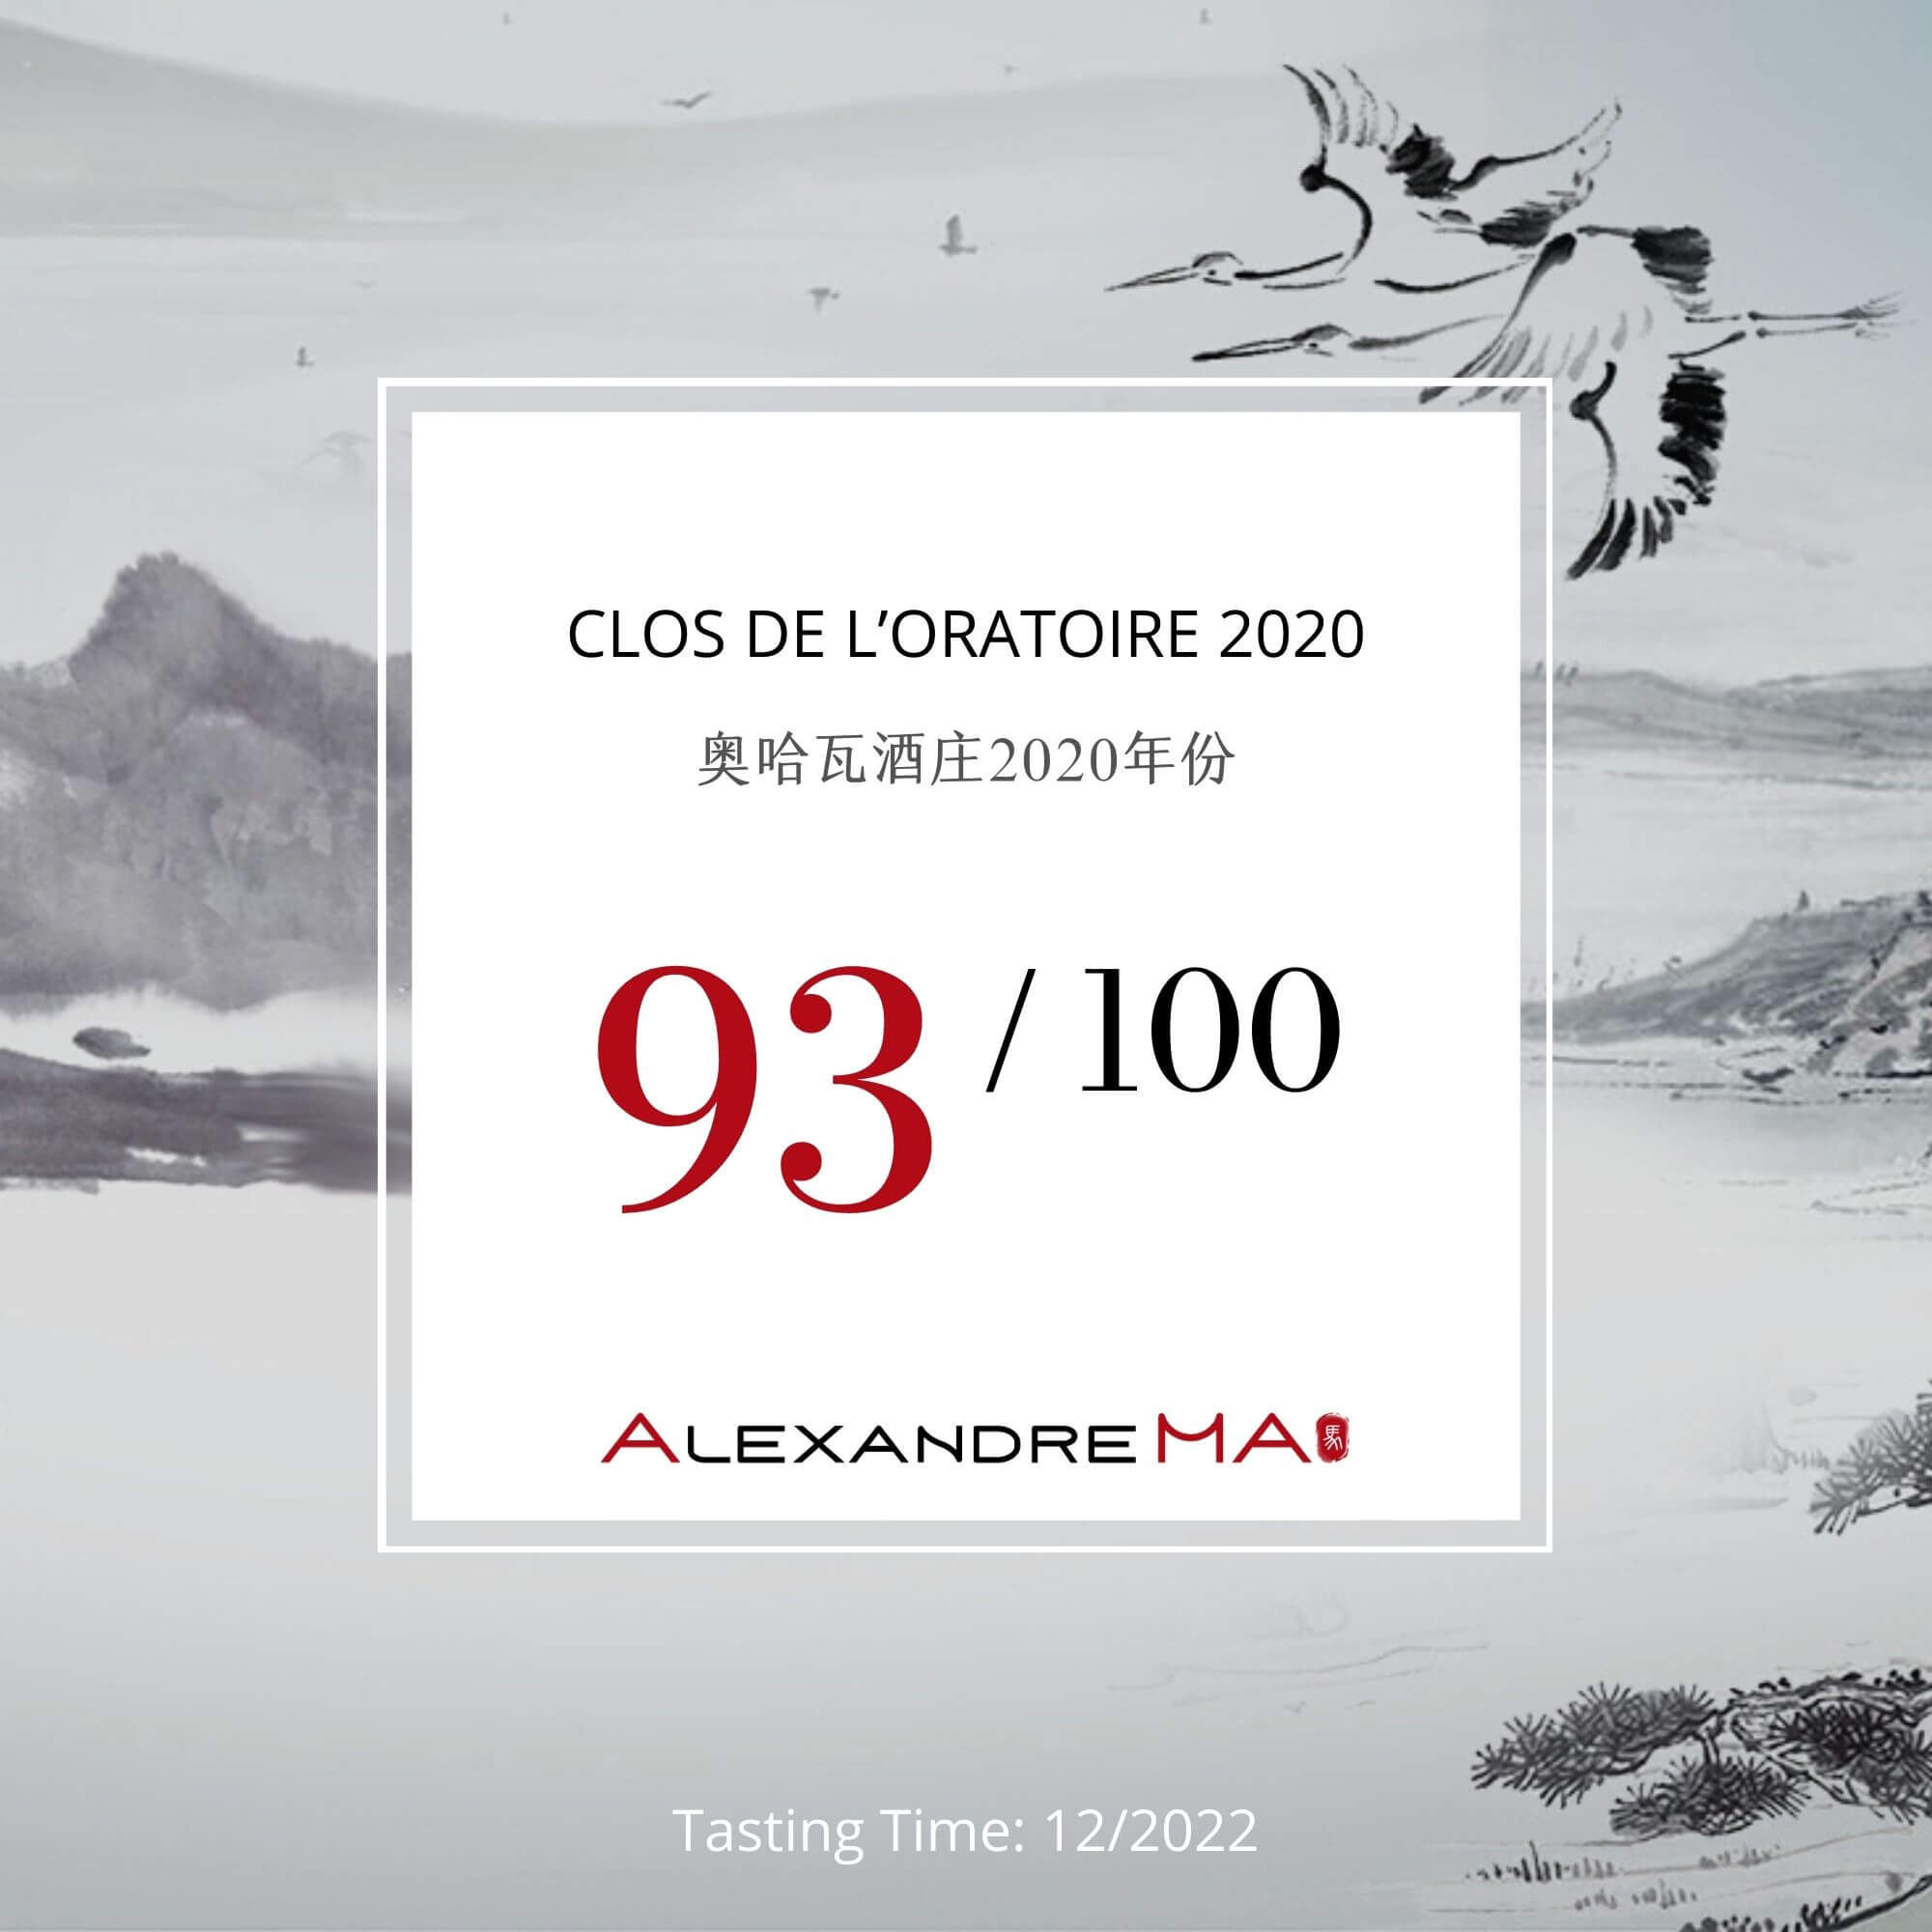 Clos de L’Oratoire 2020 - Alexandre MA